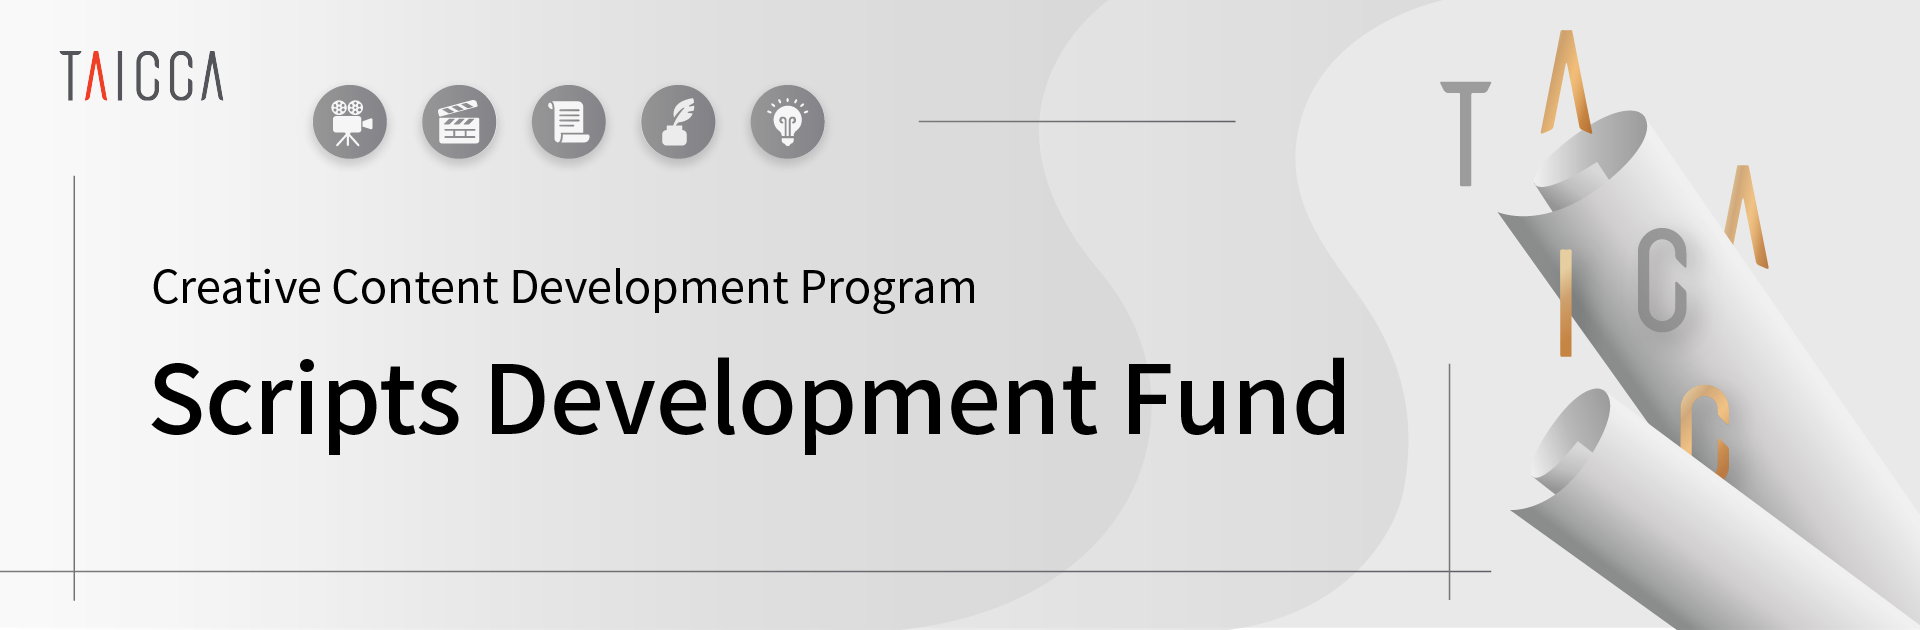 TAICCA’s Creative Content Development Program (CCDP)